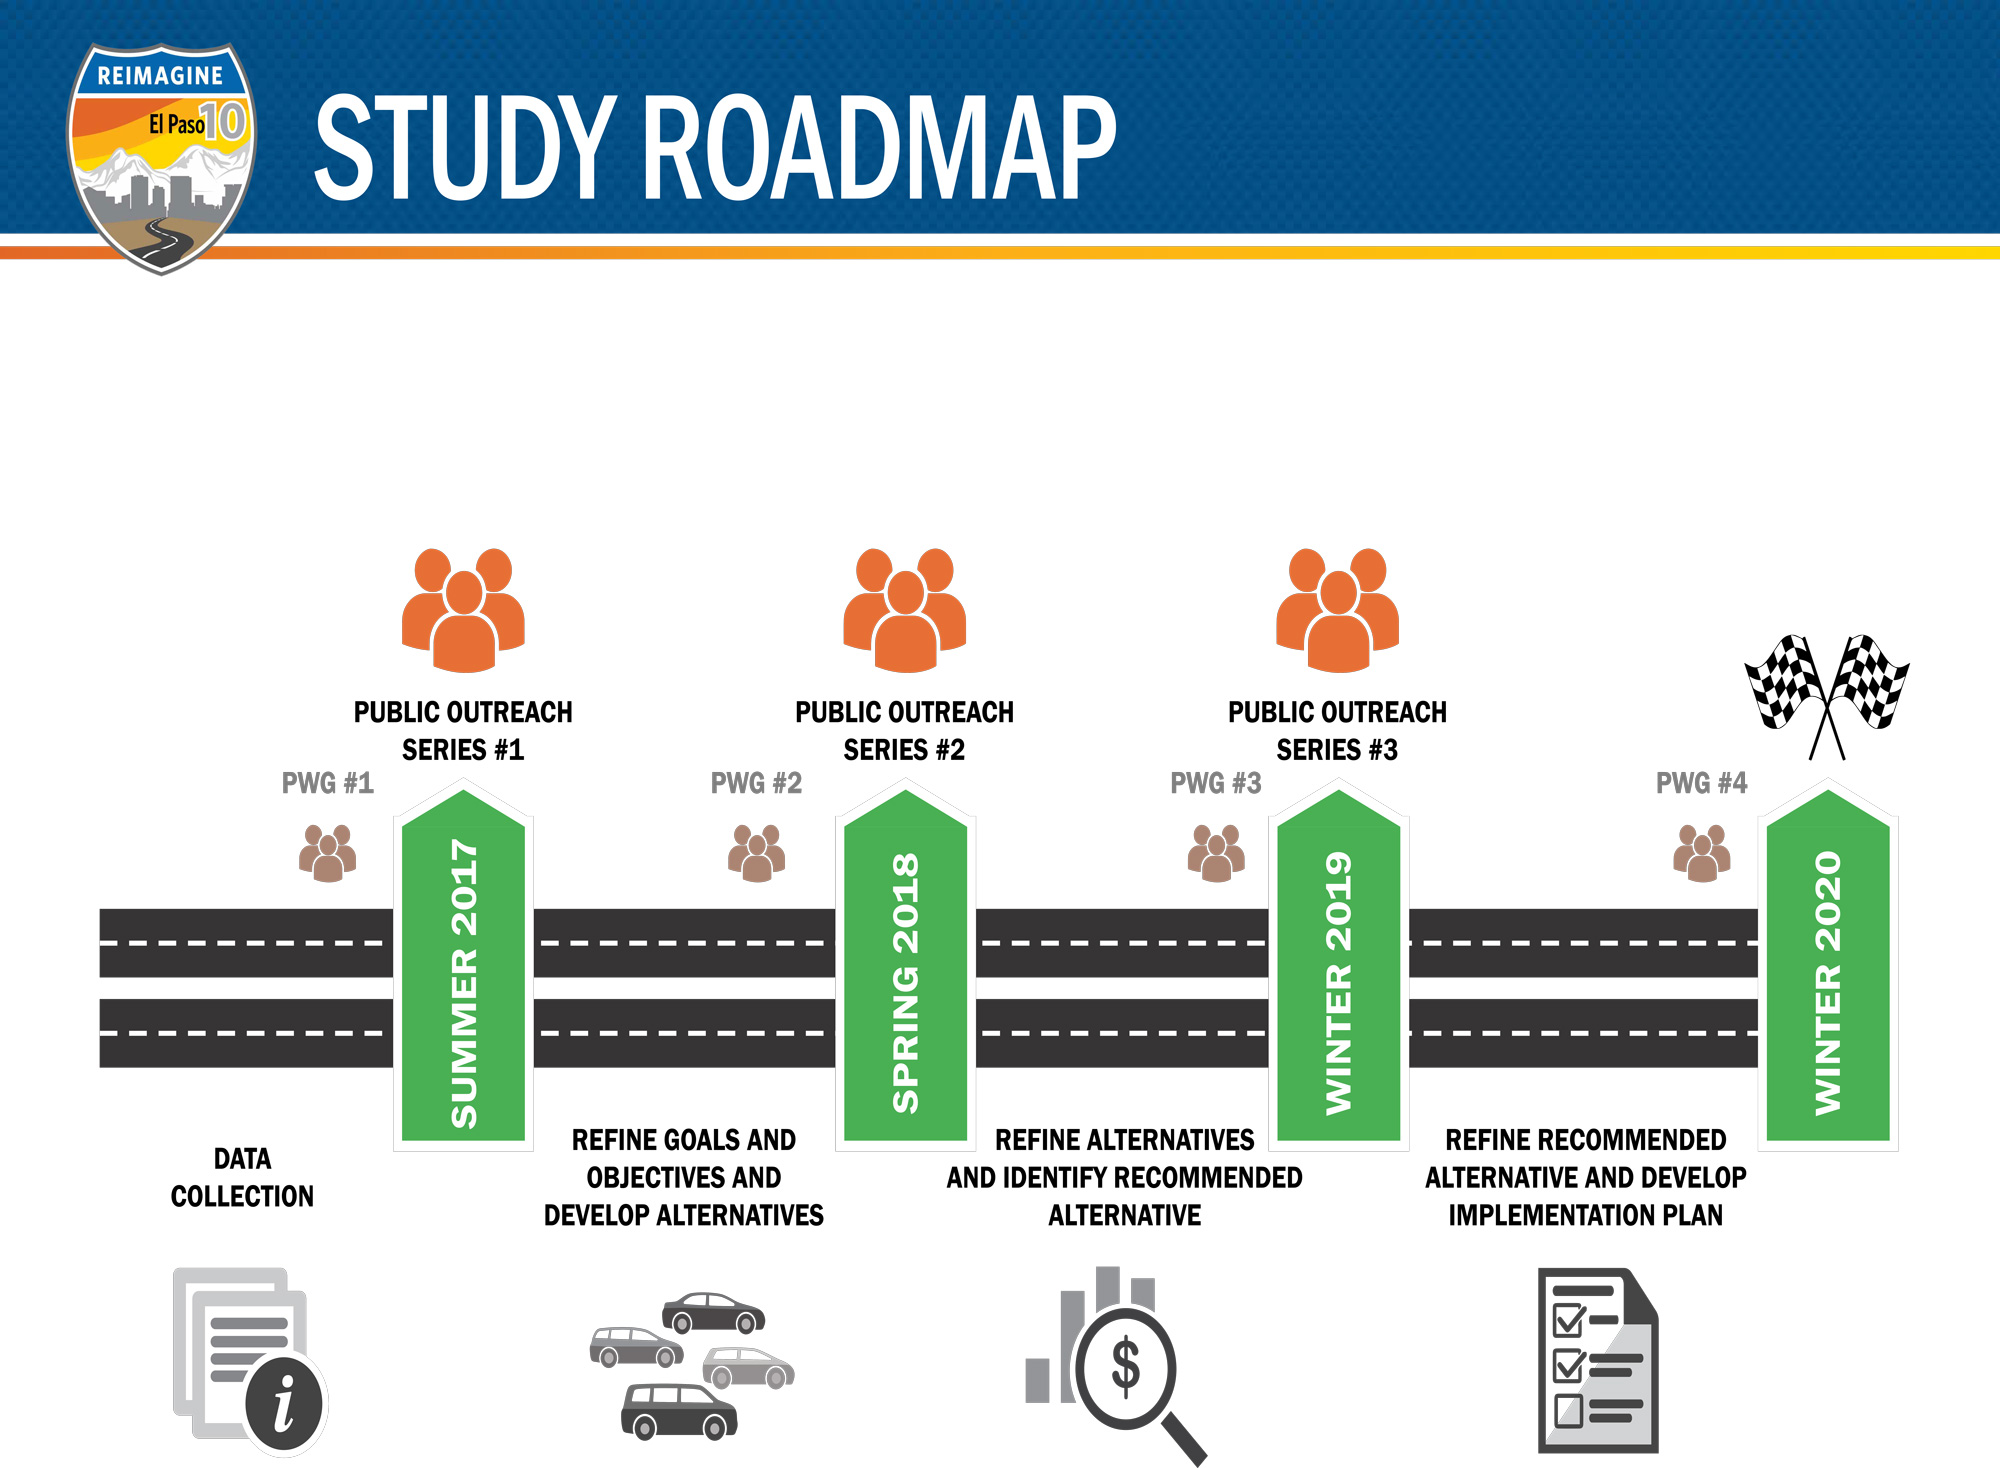 Reimagine I-10 Study Roadmap